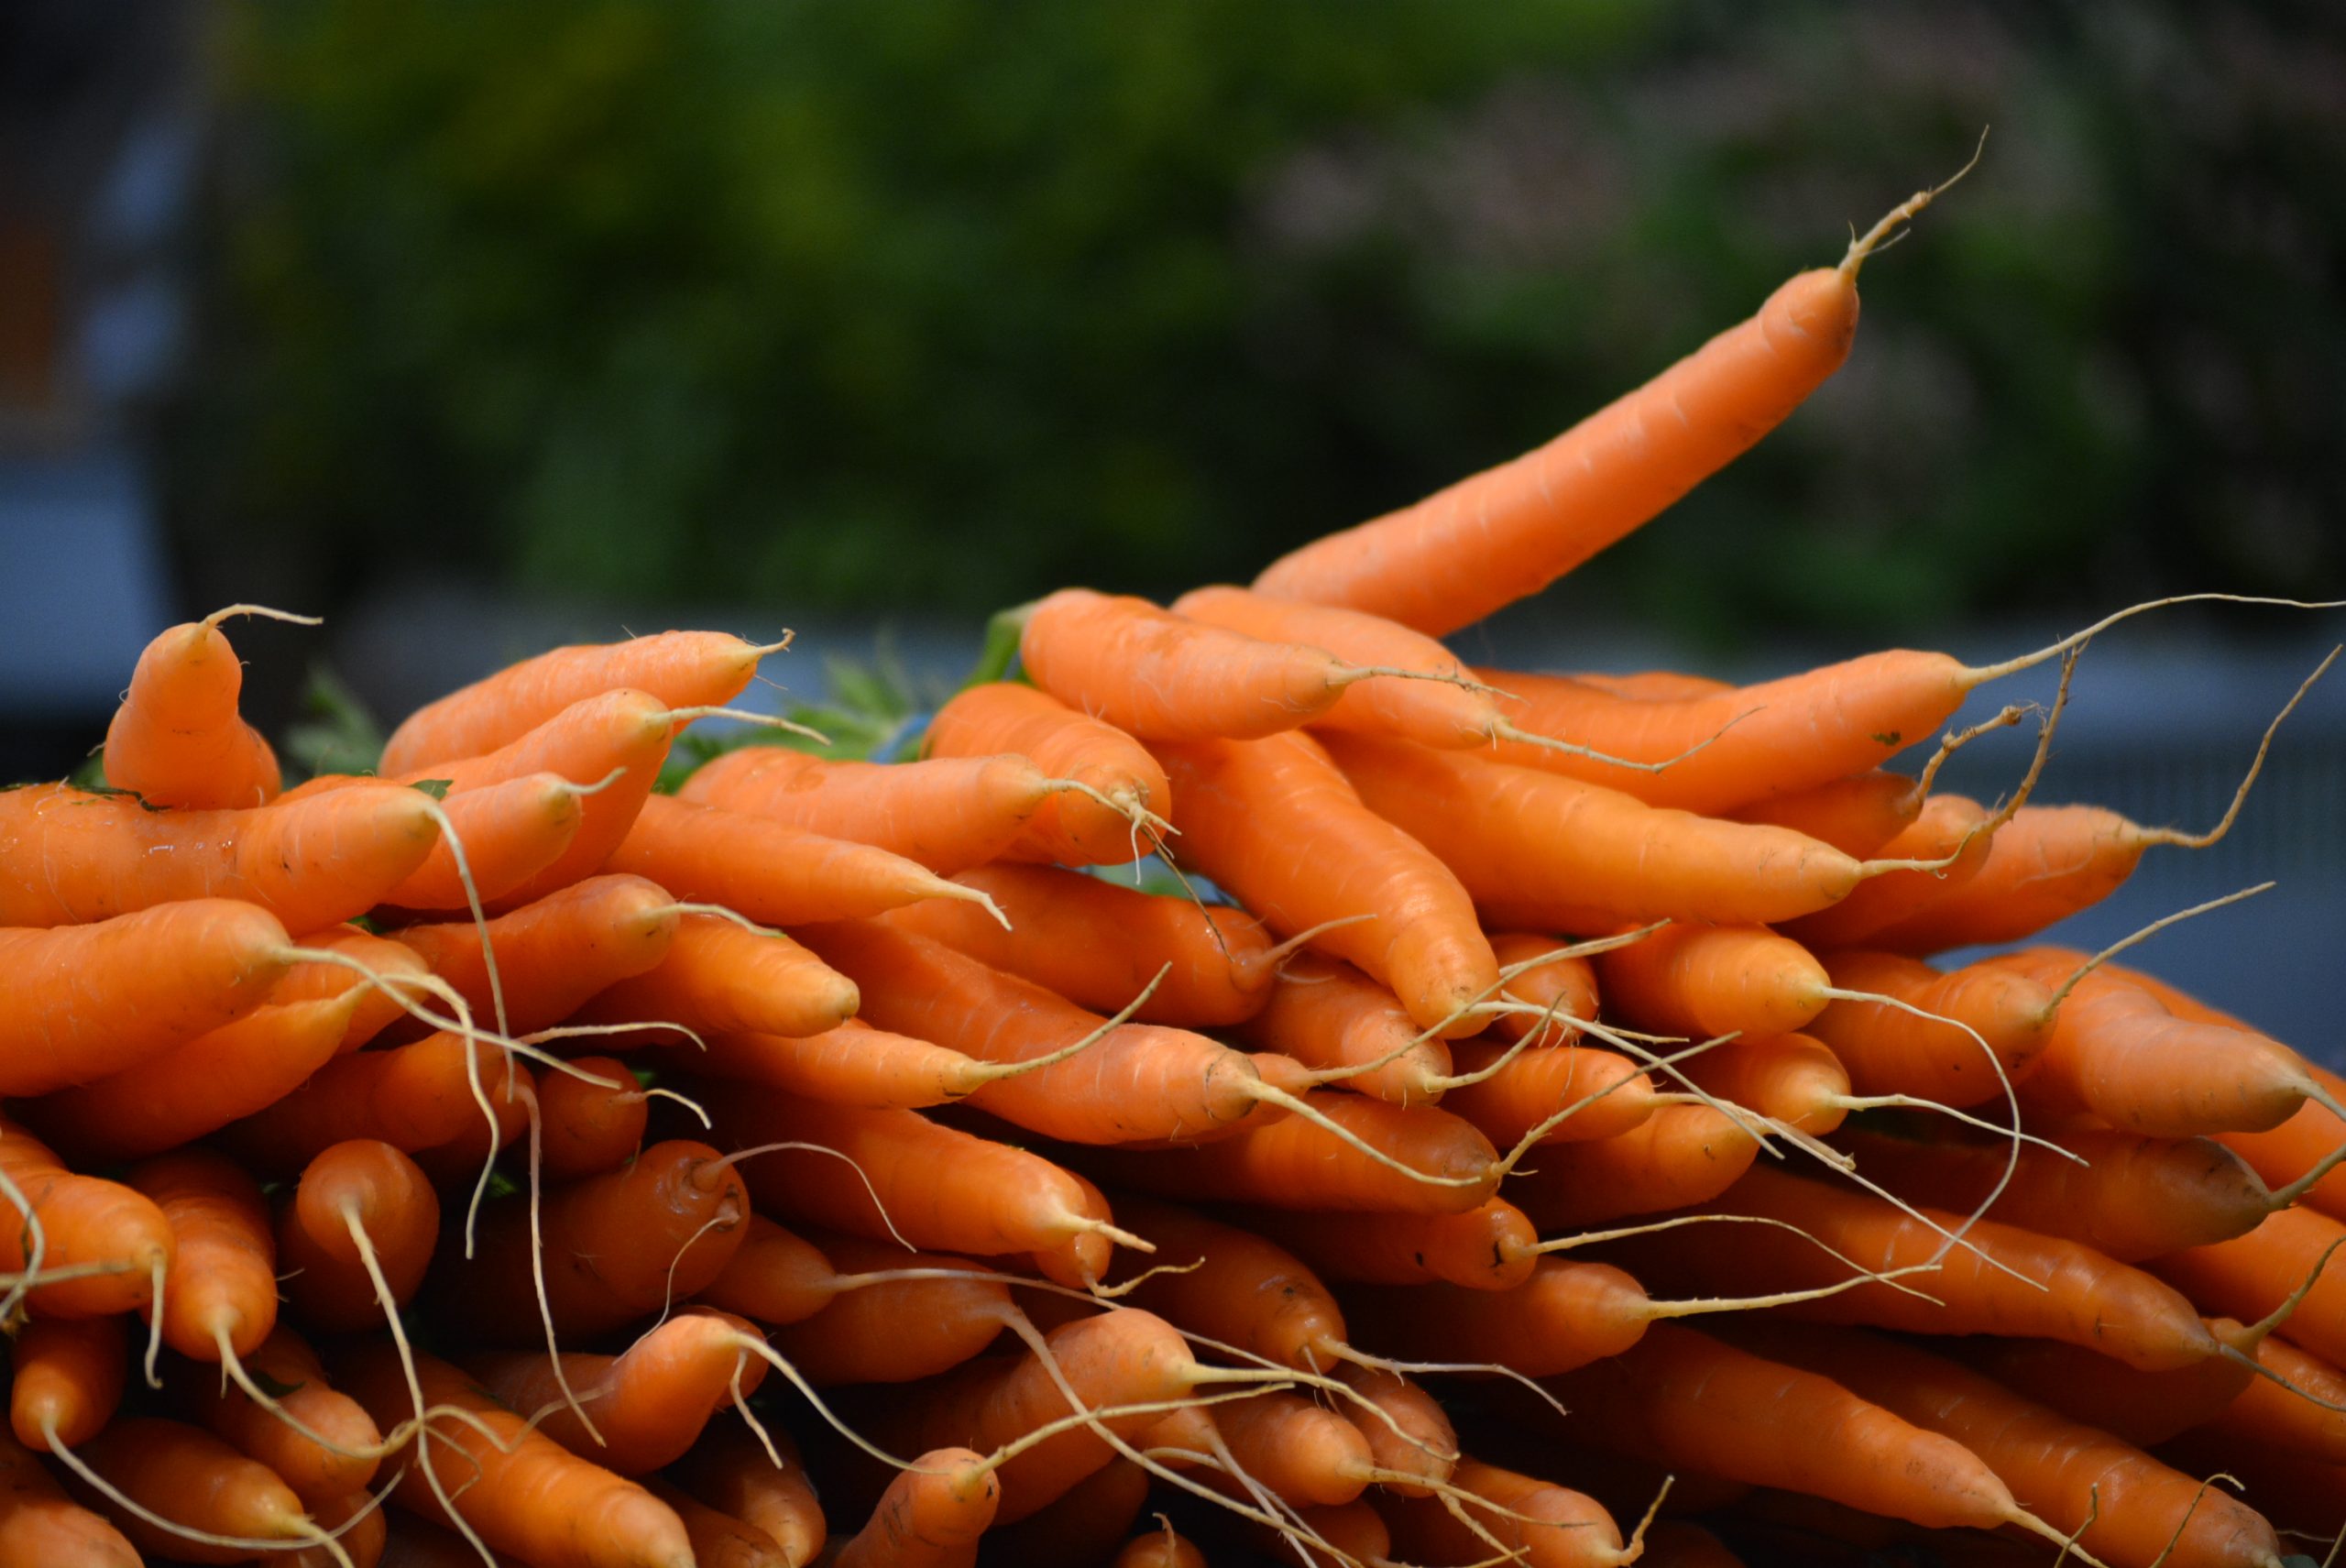 Carrots at Farmers Market